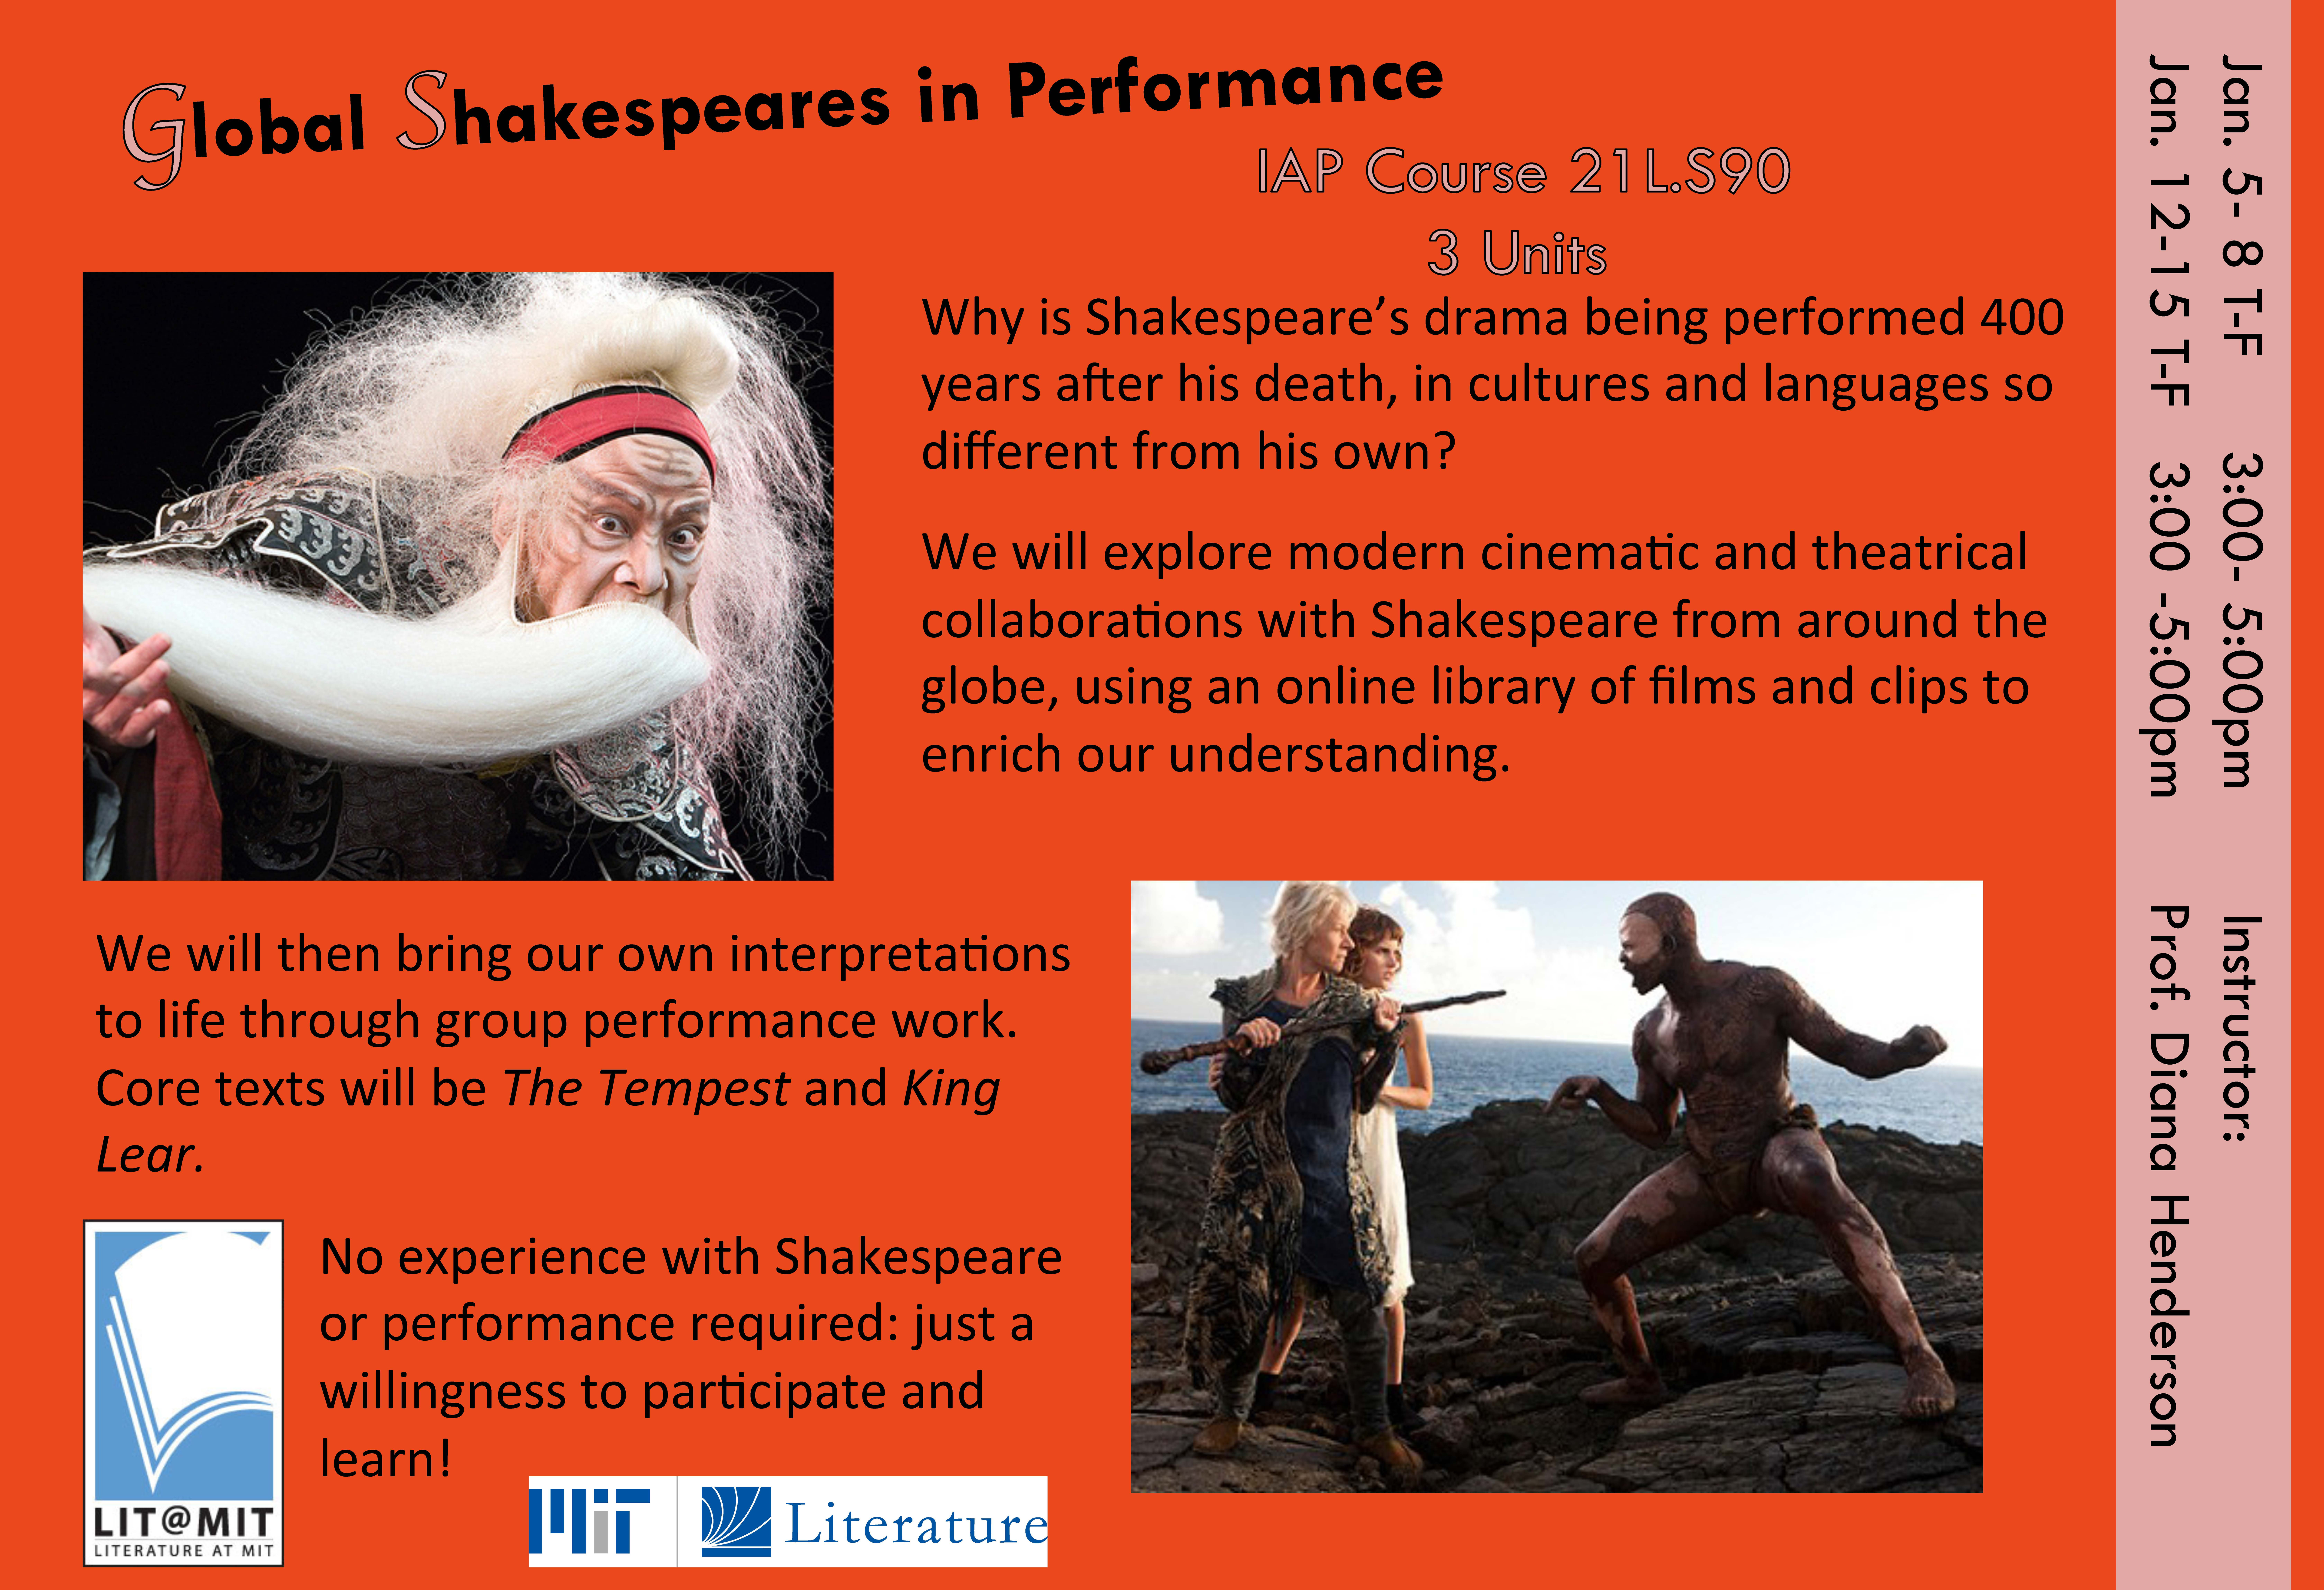 Global Shakespeares poster